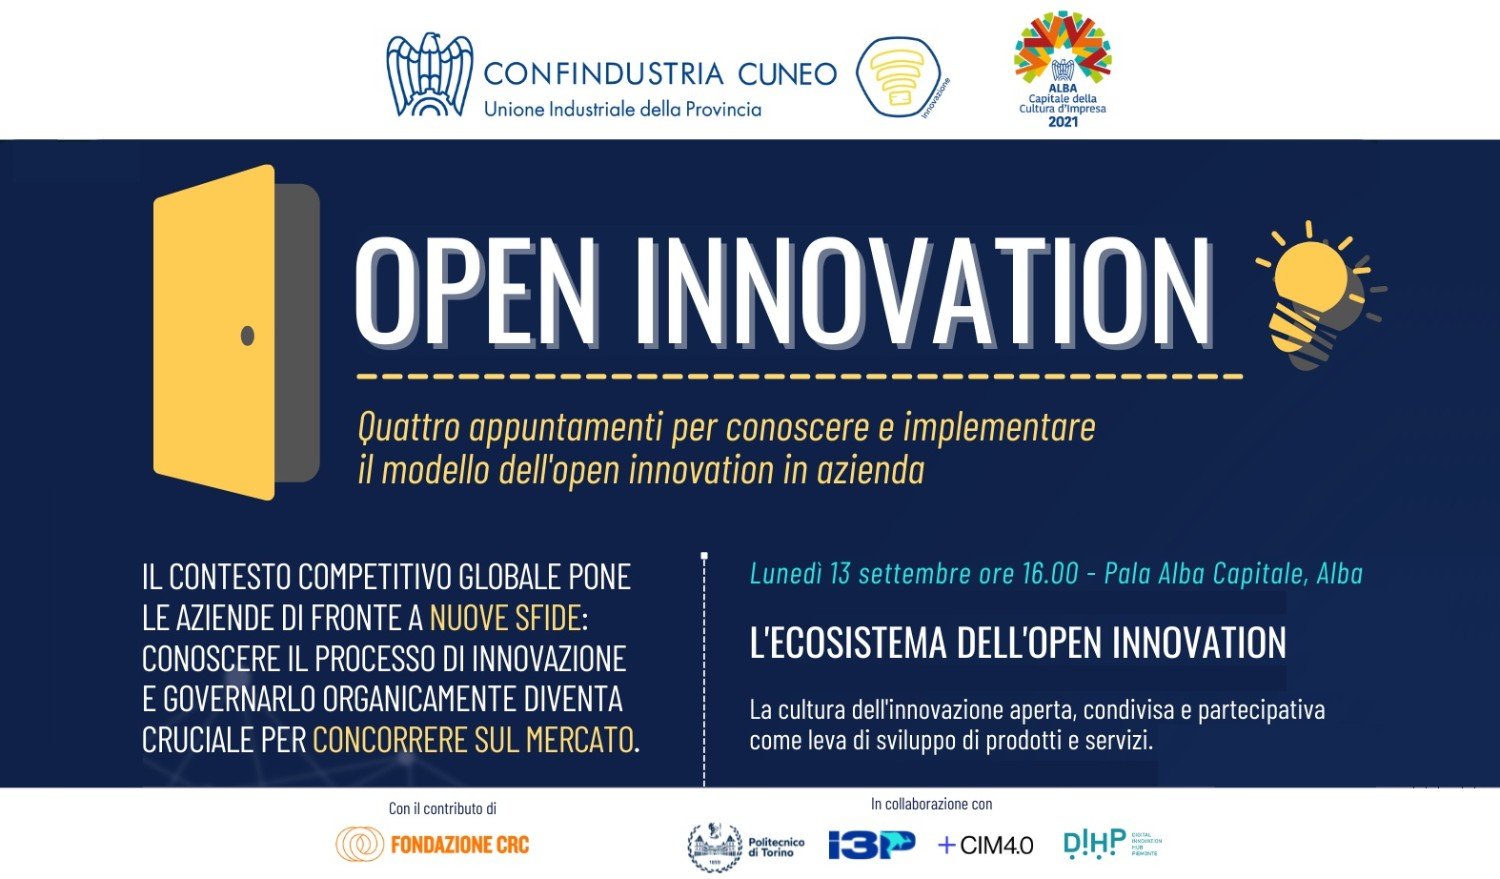 L'ecosistema dell'Open Innovation